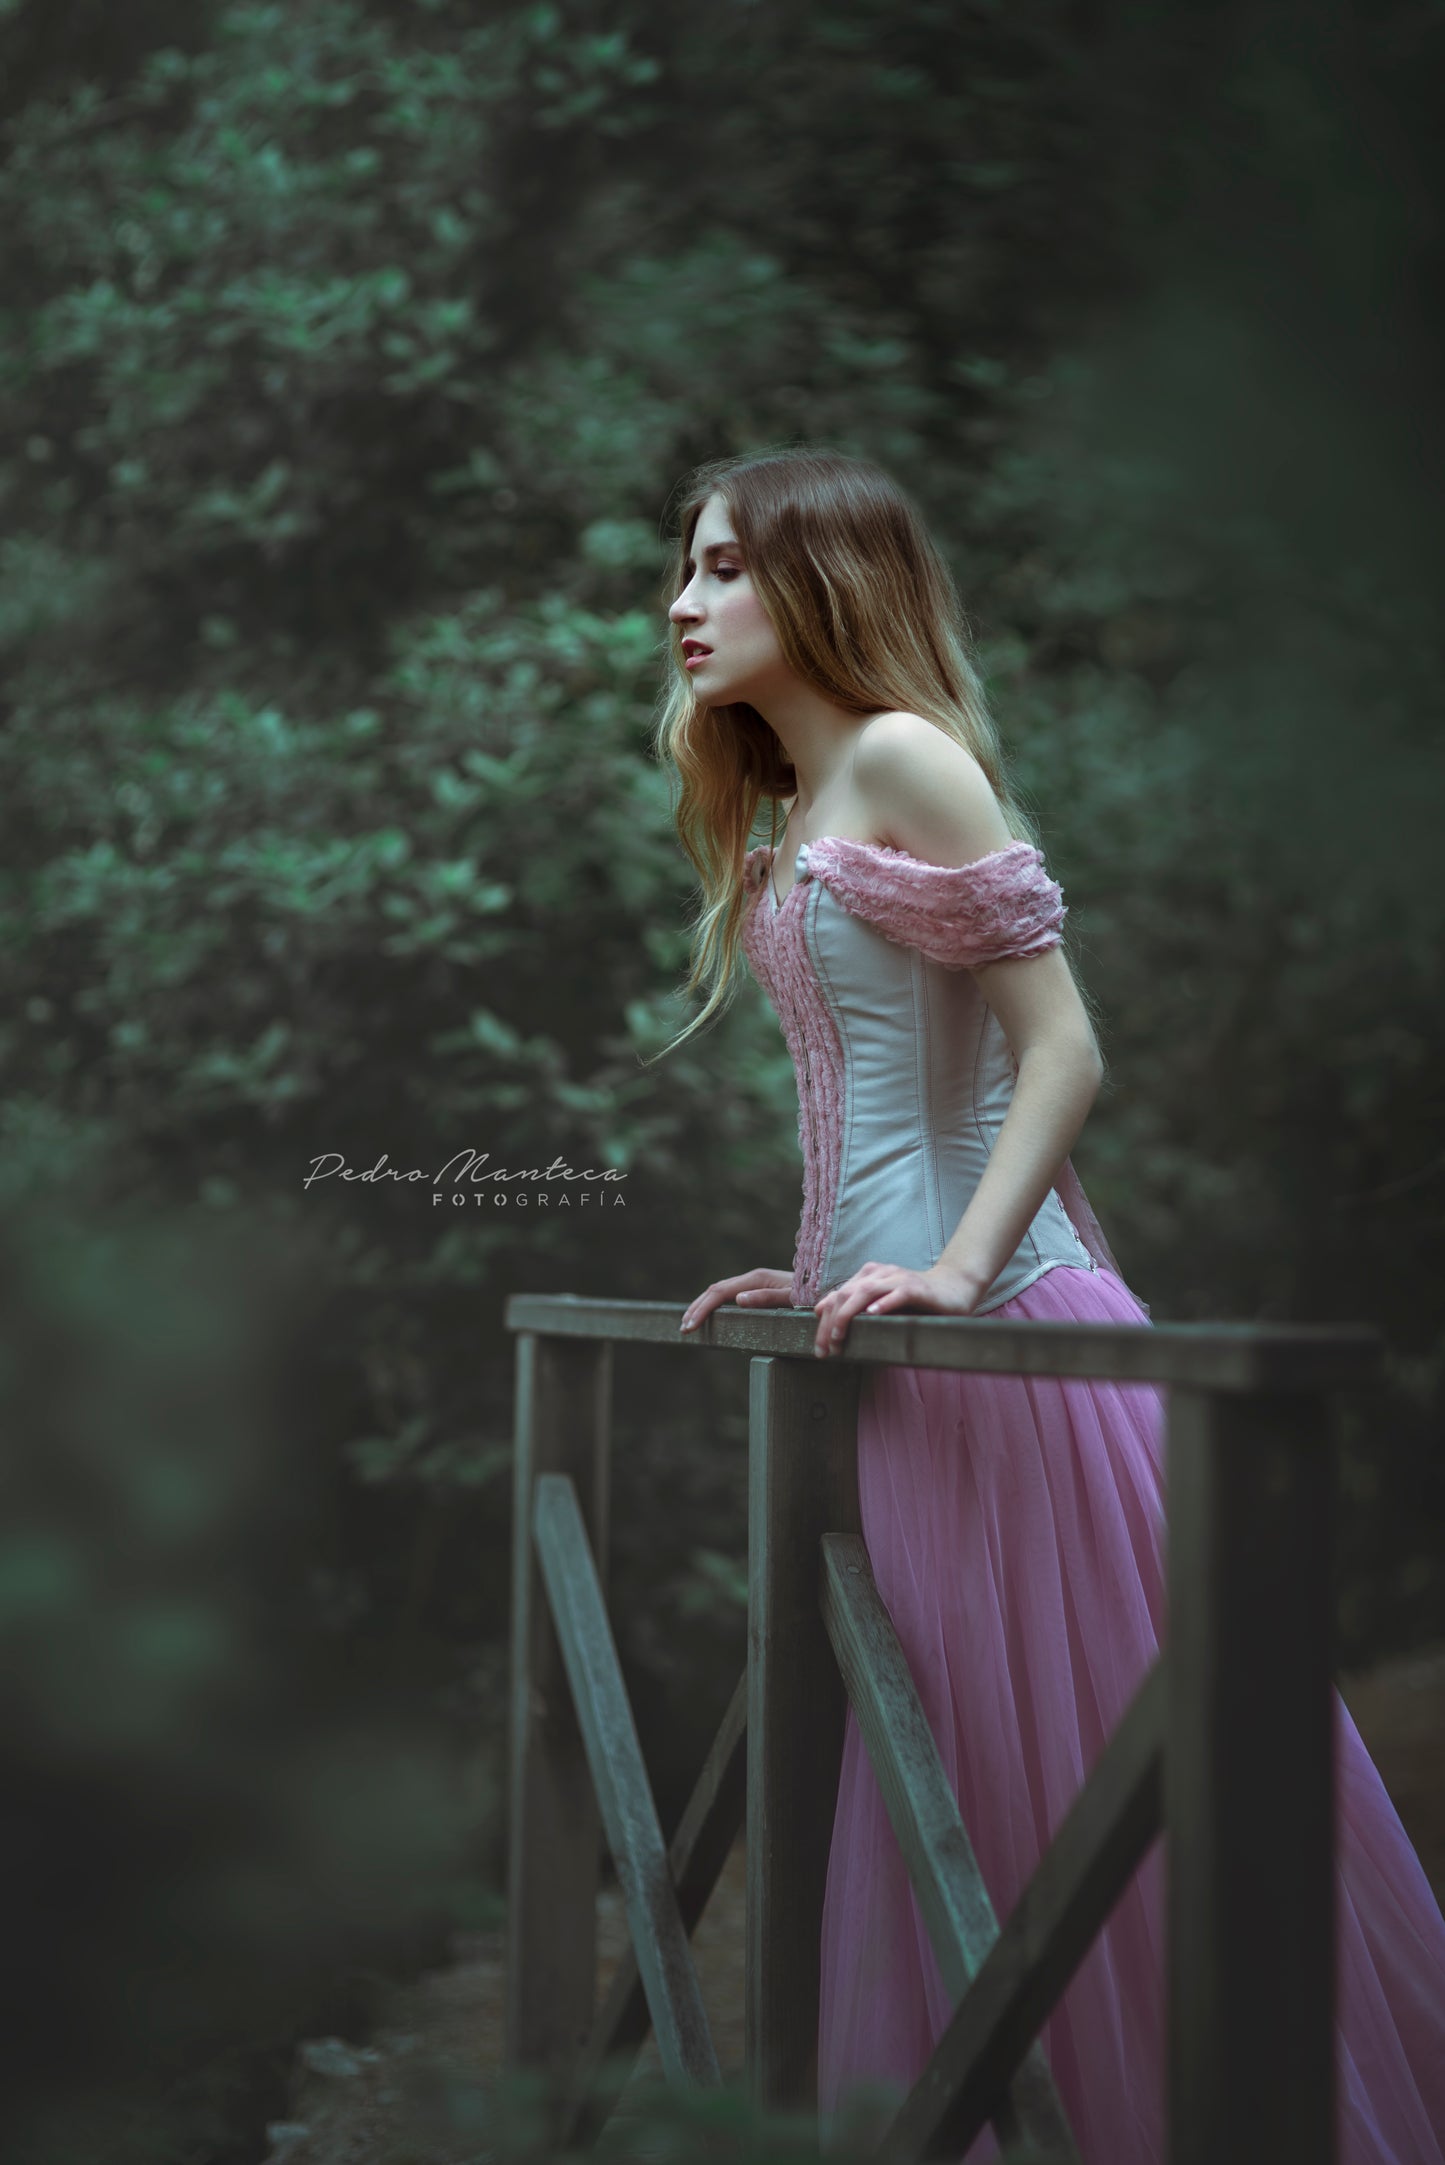 Fairytale princess dress